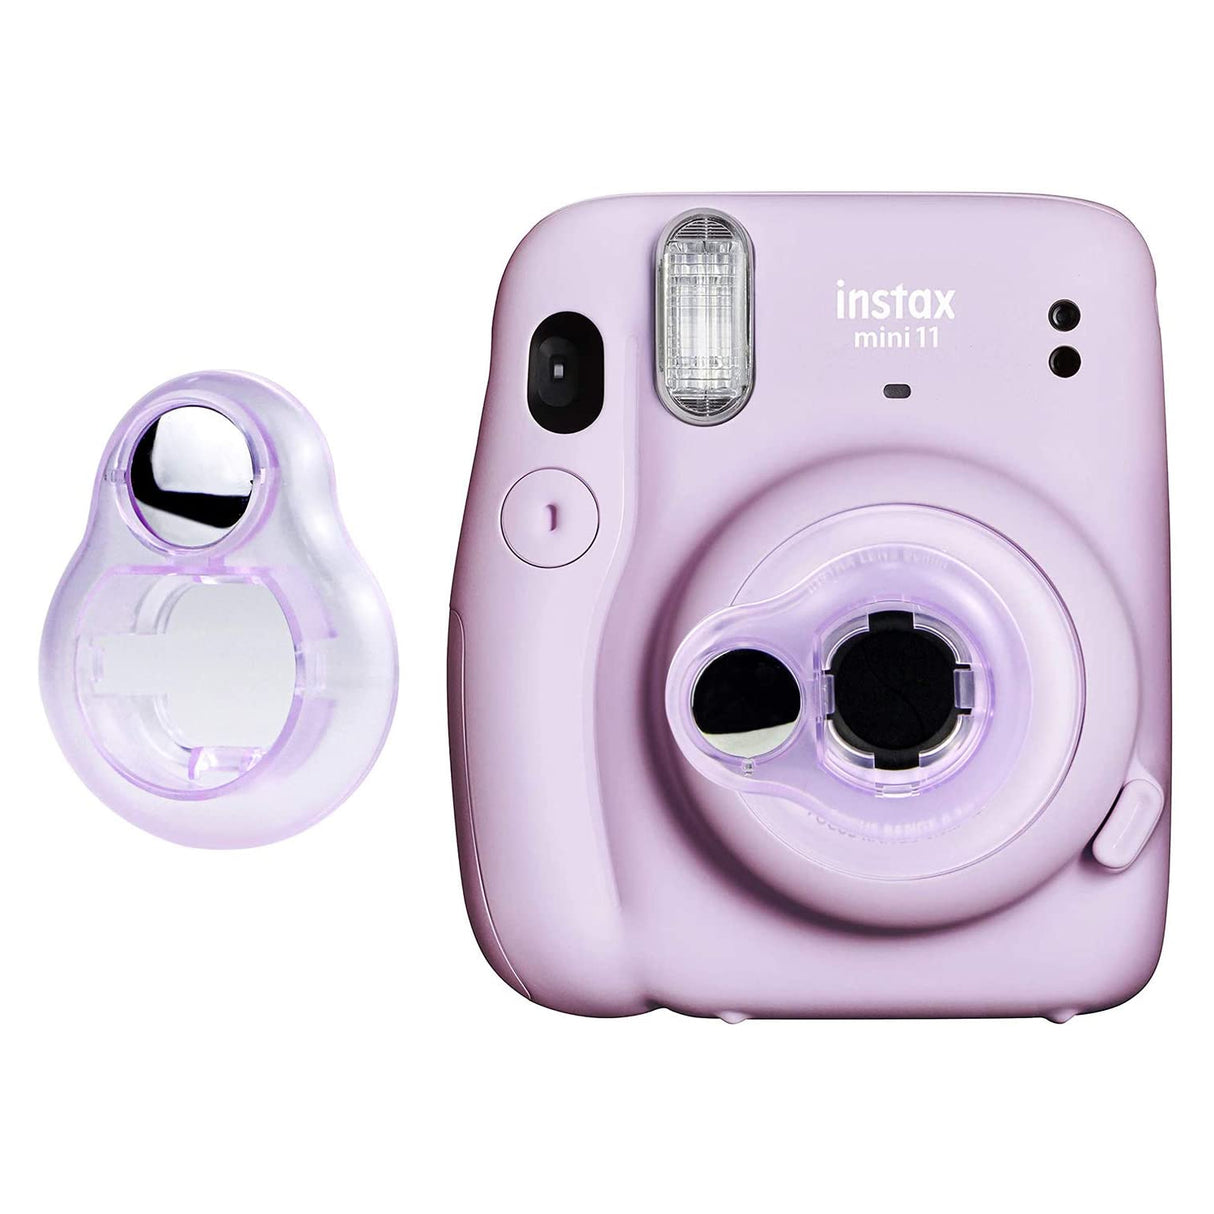 ZENKO Compatible Mini 11 Camera Case Bundle with Album, Filters Other Accessories (7 Items)